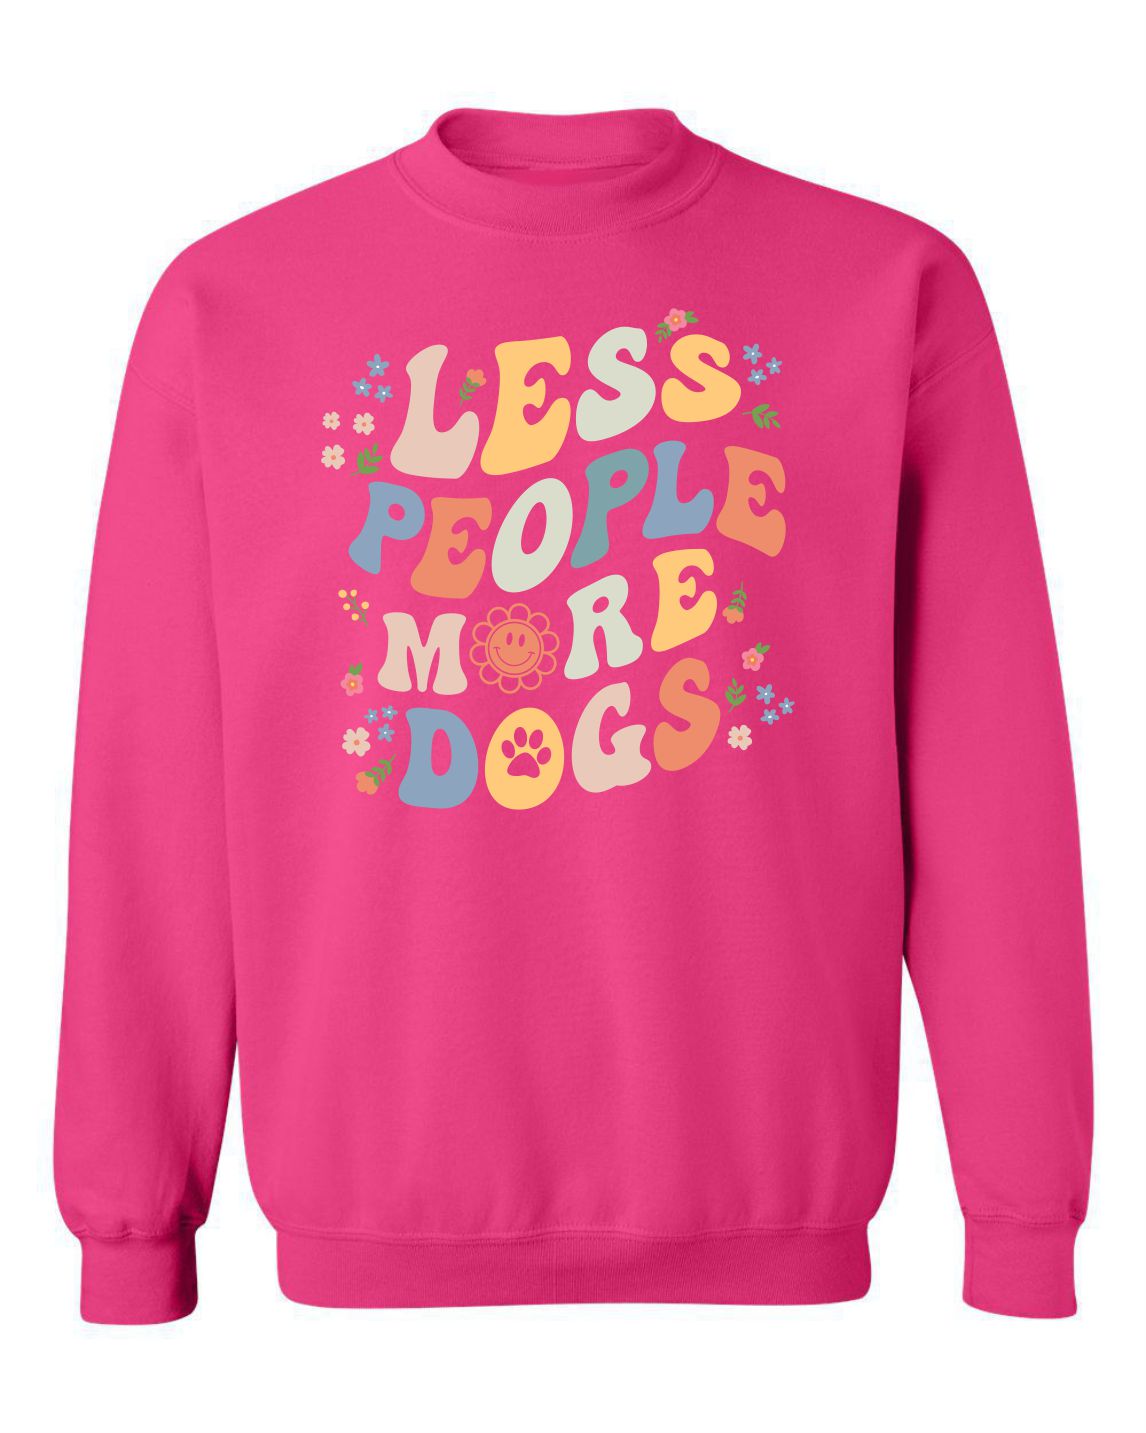 "Less People. More Dogs.” Unisex Crewneck Sweatshirt